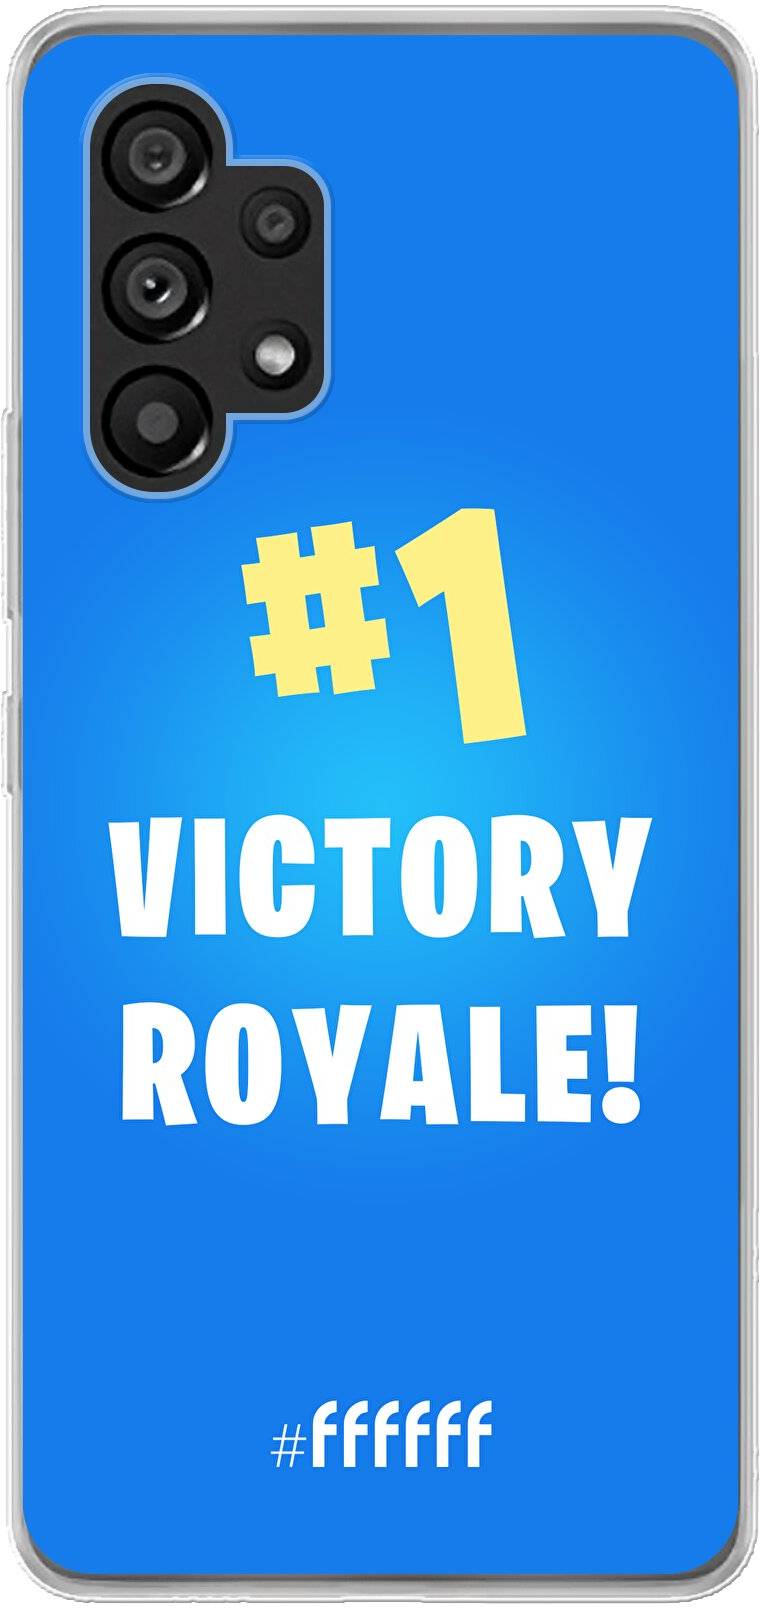 Battle Royale - Victory Royale Galaxy A53 5G